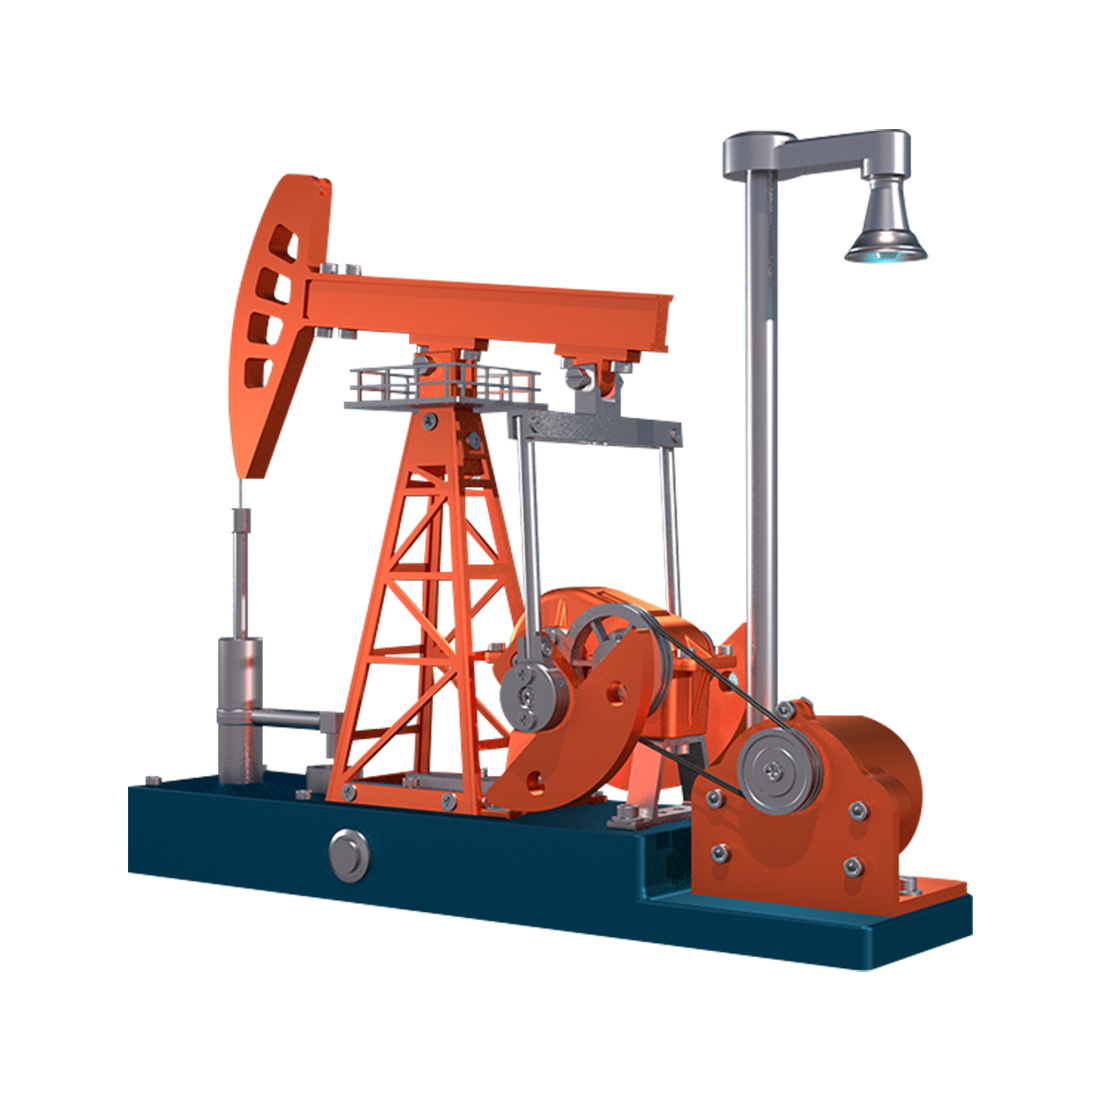 Oil pumping unit